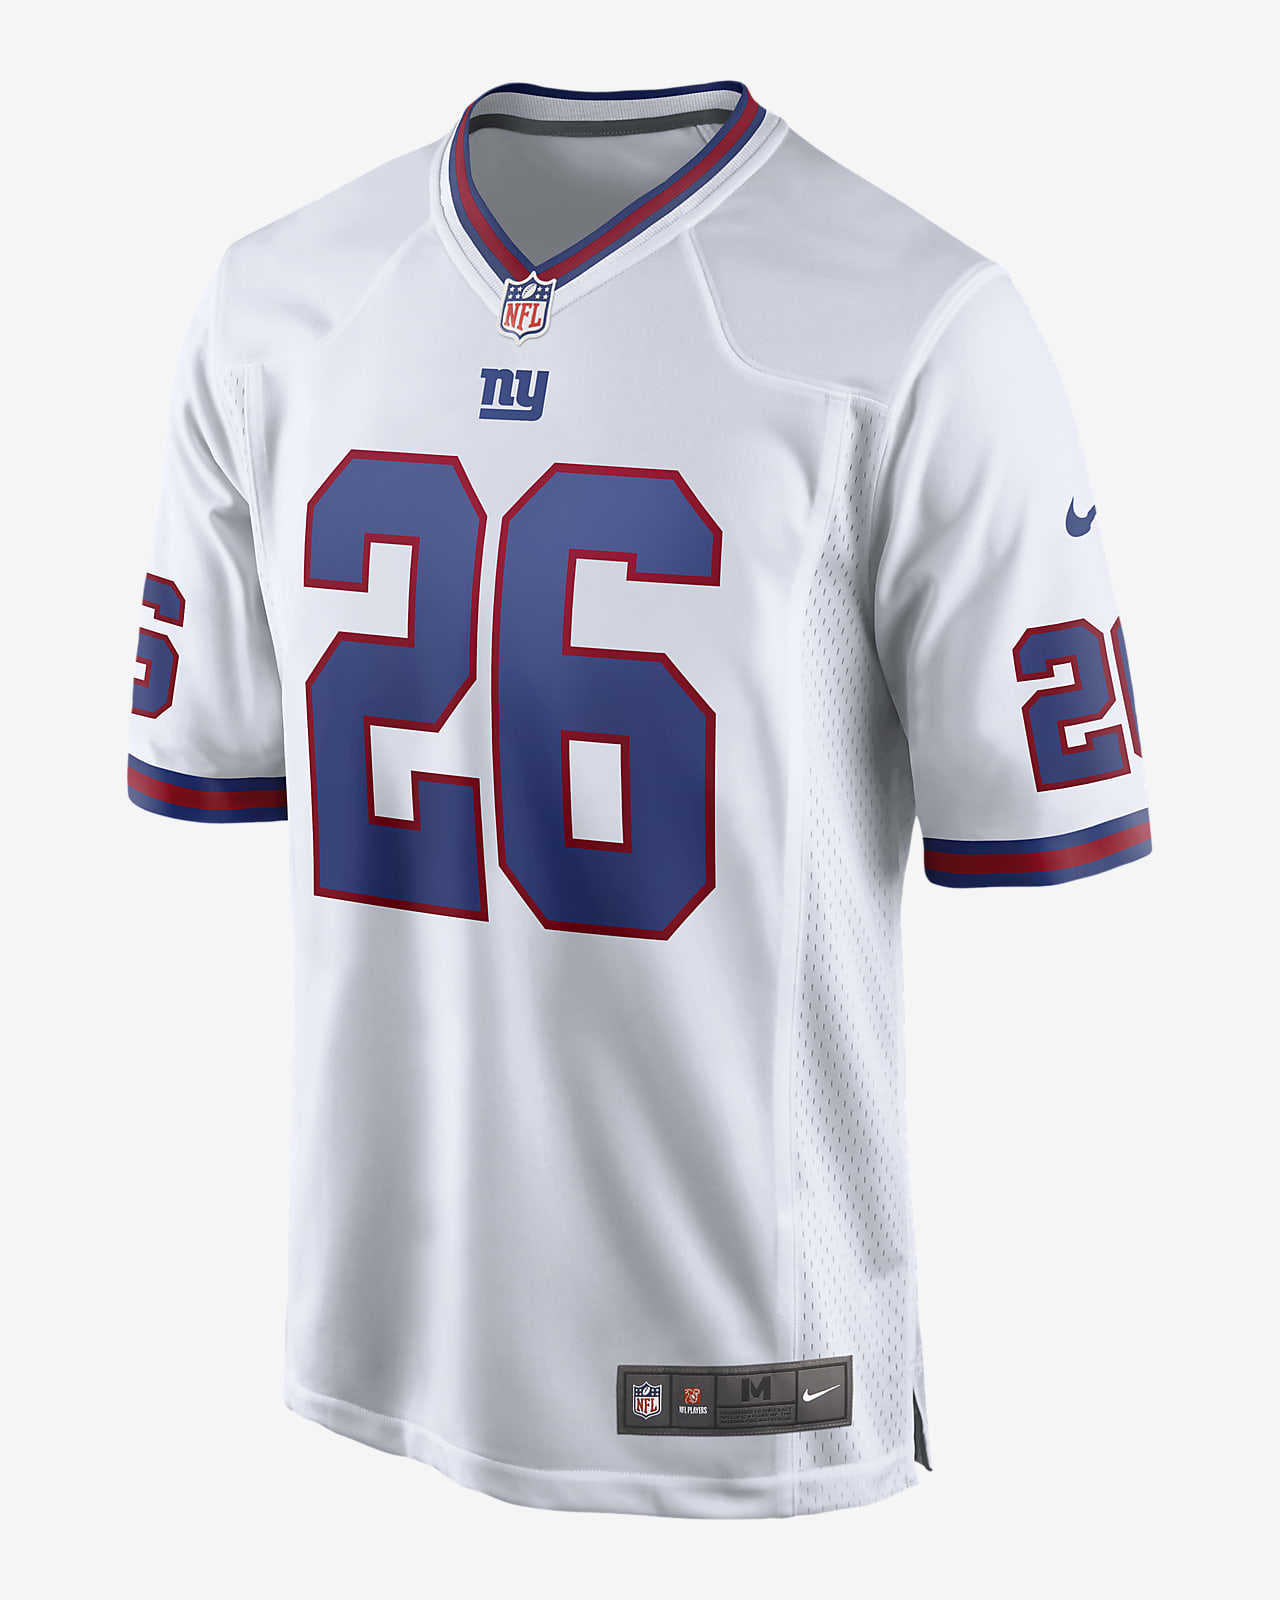 Jersey de fútbol americano para hombre NFL New York Giants (Saquon Barkley).